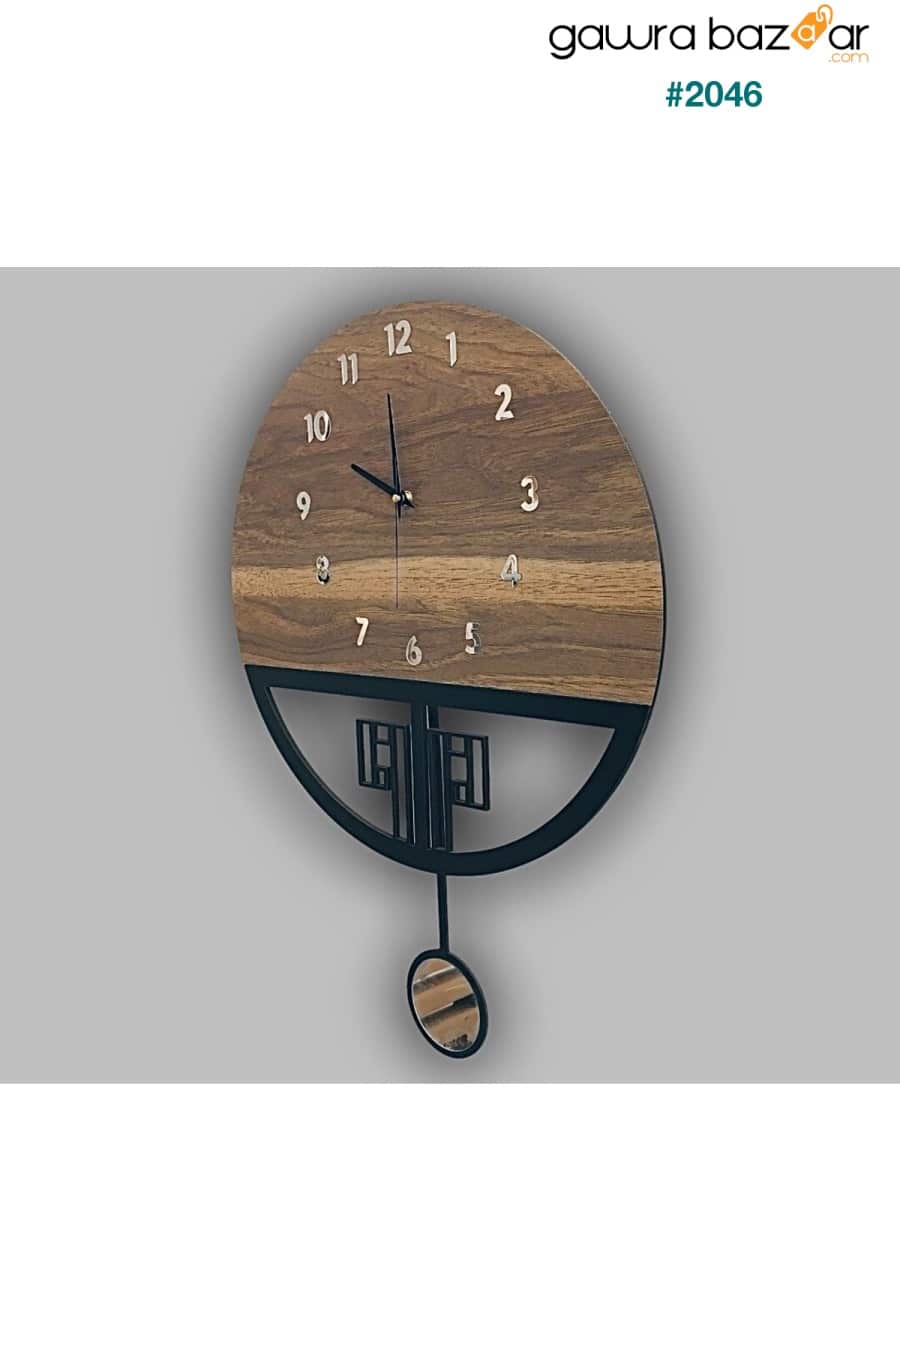 ساعة حائط خشبية بندول صامت ، ساعة بندول ، ساعة حائط ، ساعة حائط خشبية ، ساعة حائط بندول hayalevimahsap 5